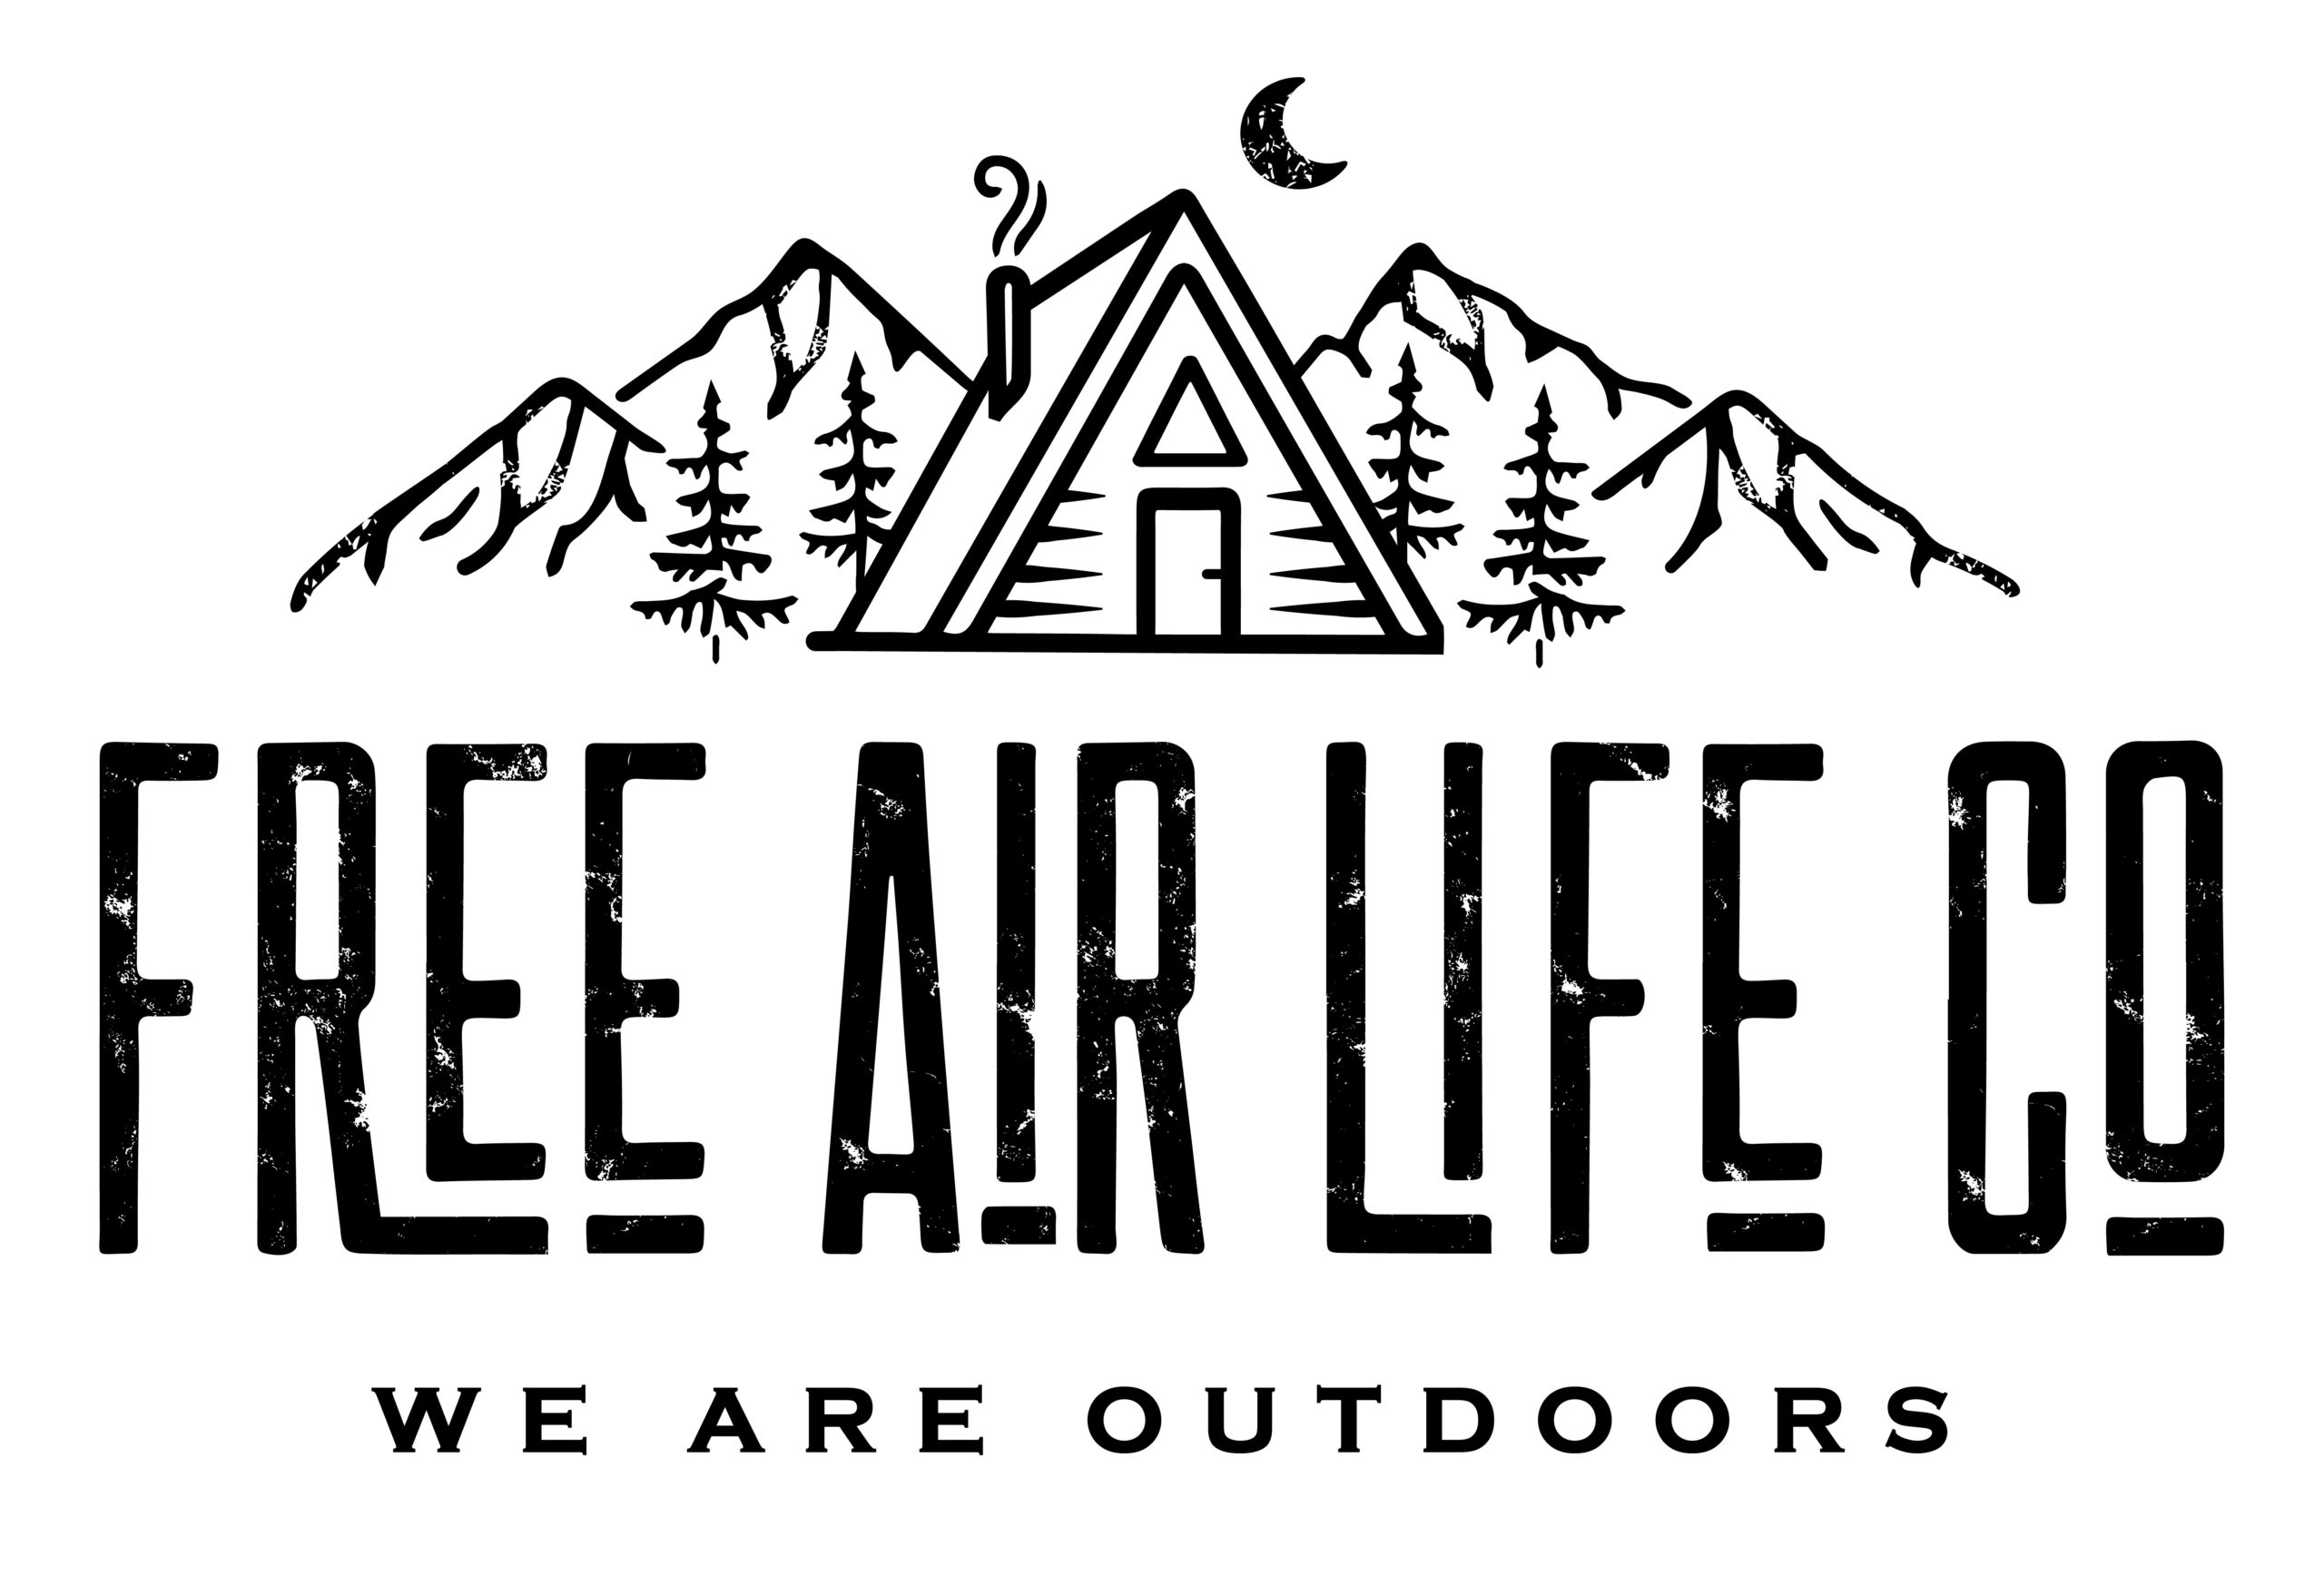 Free Air Life Co